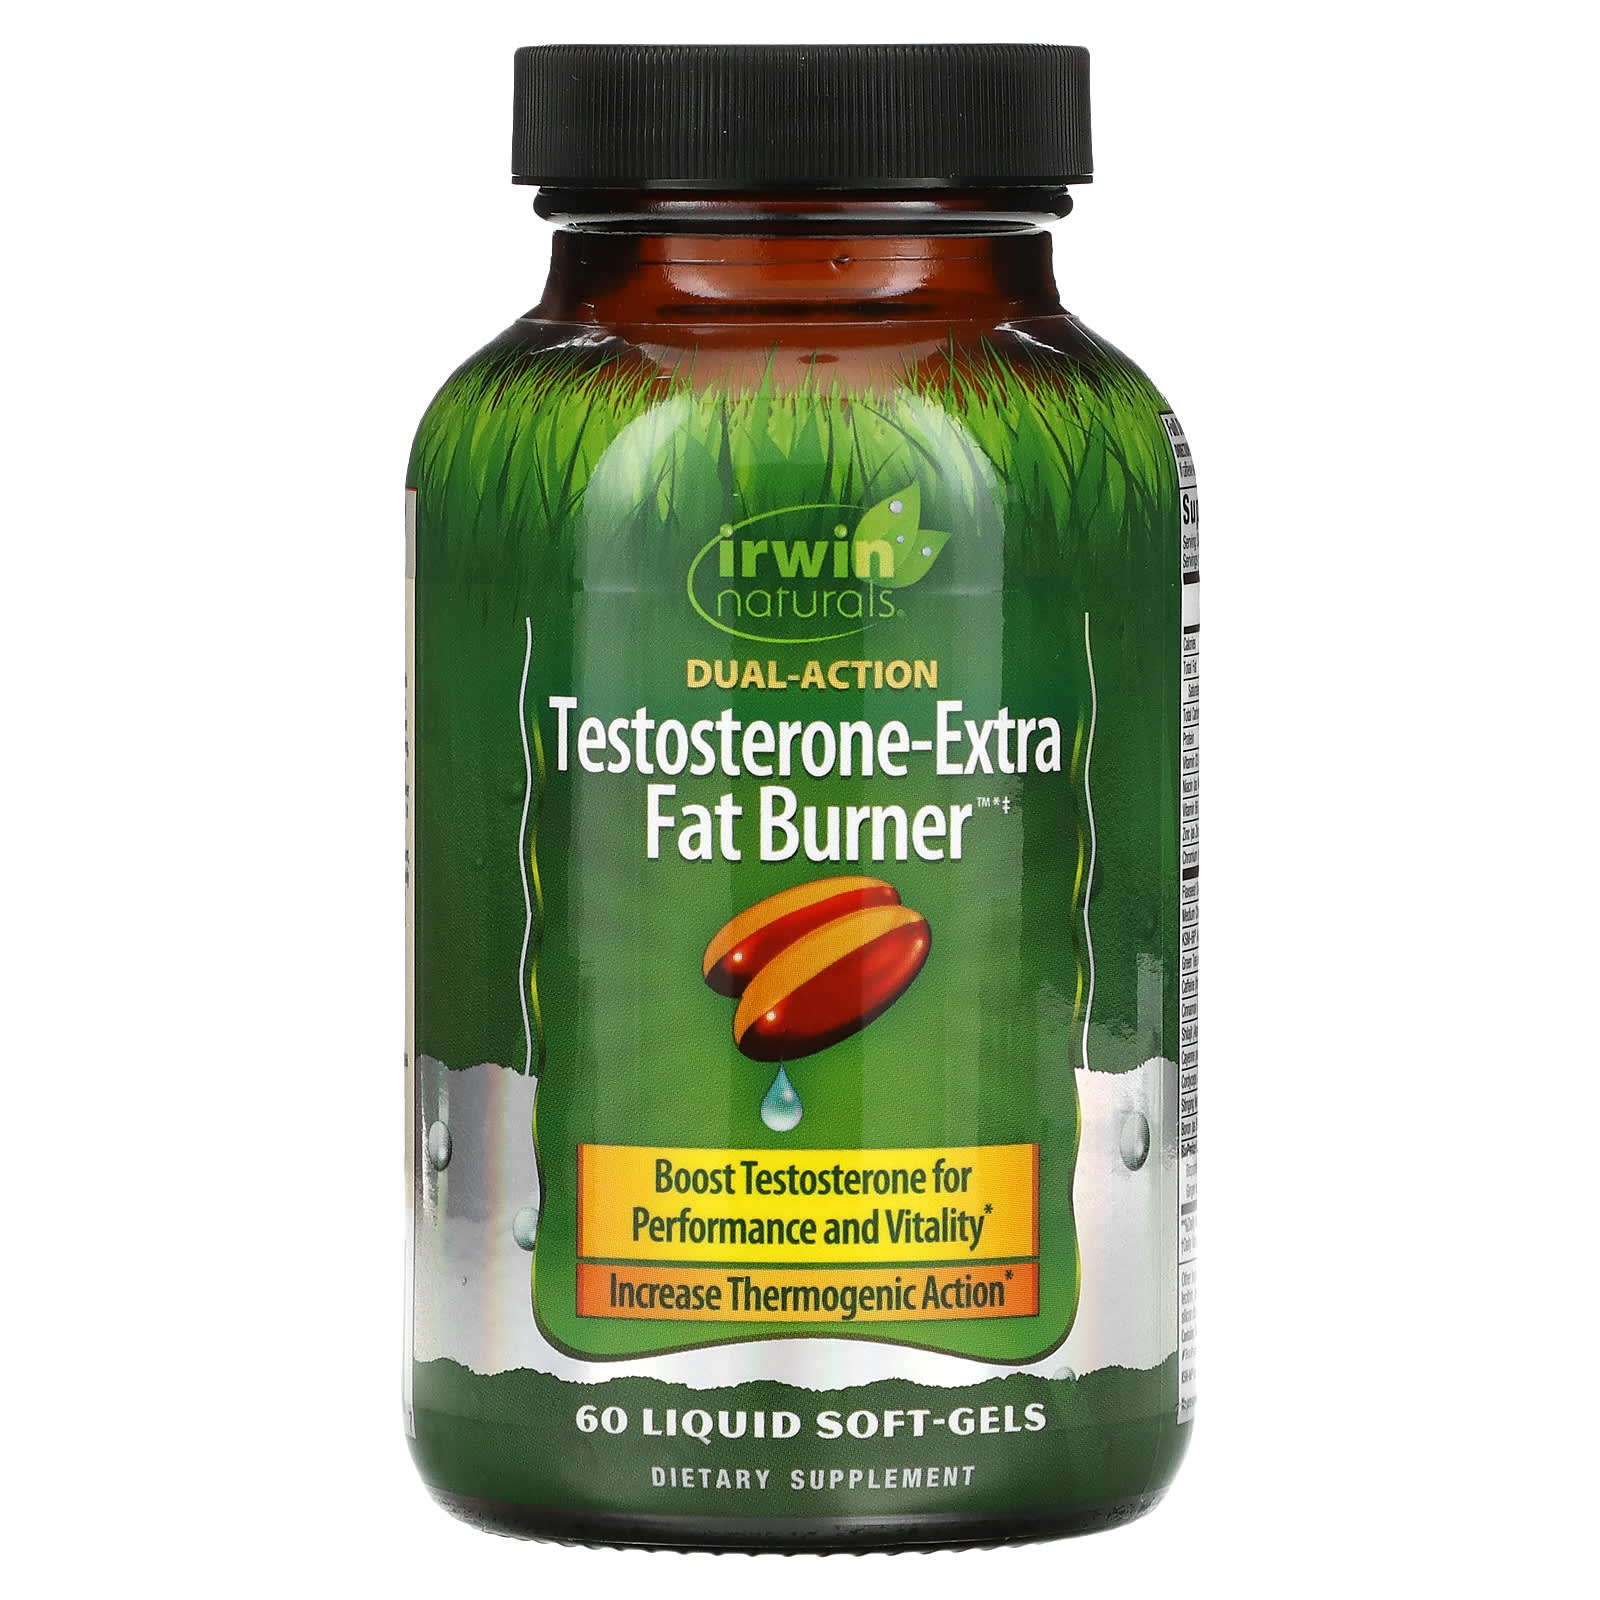 Testosterone-Extra Fat Burner, 60 Liquid Soft-Gels